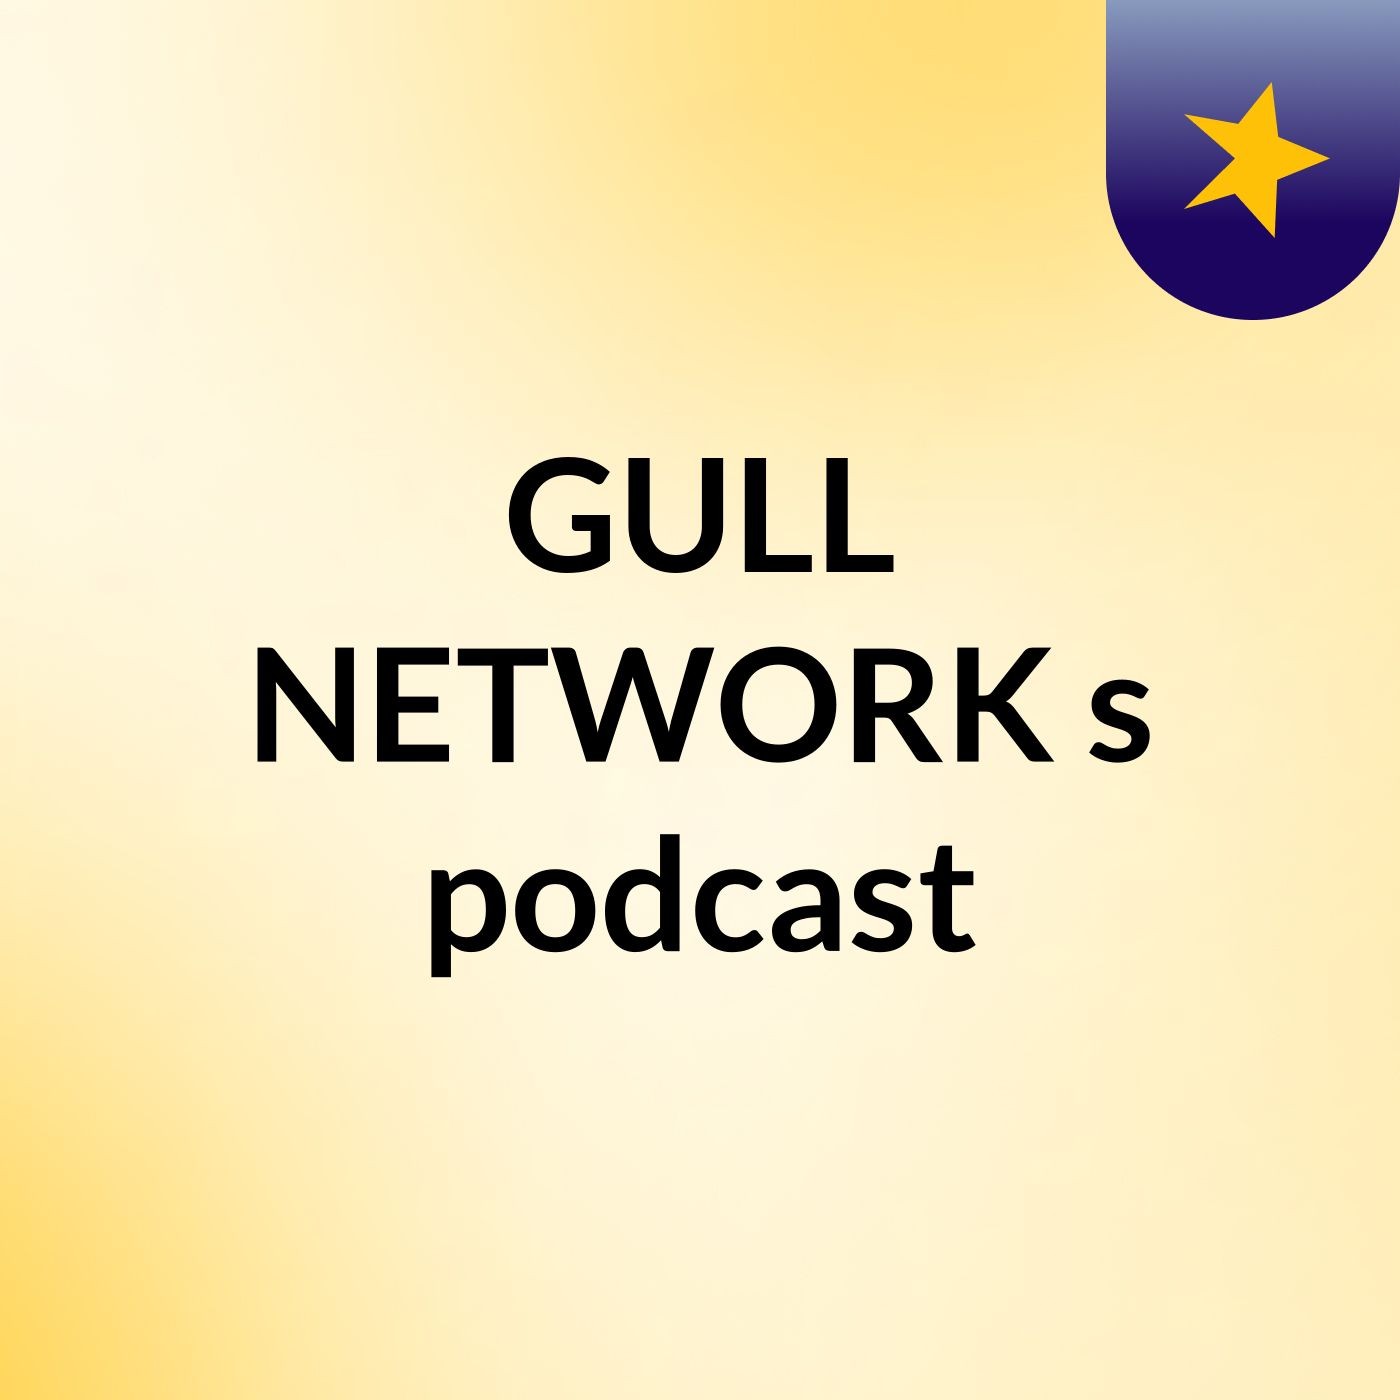 GULL NETWORK's podcast